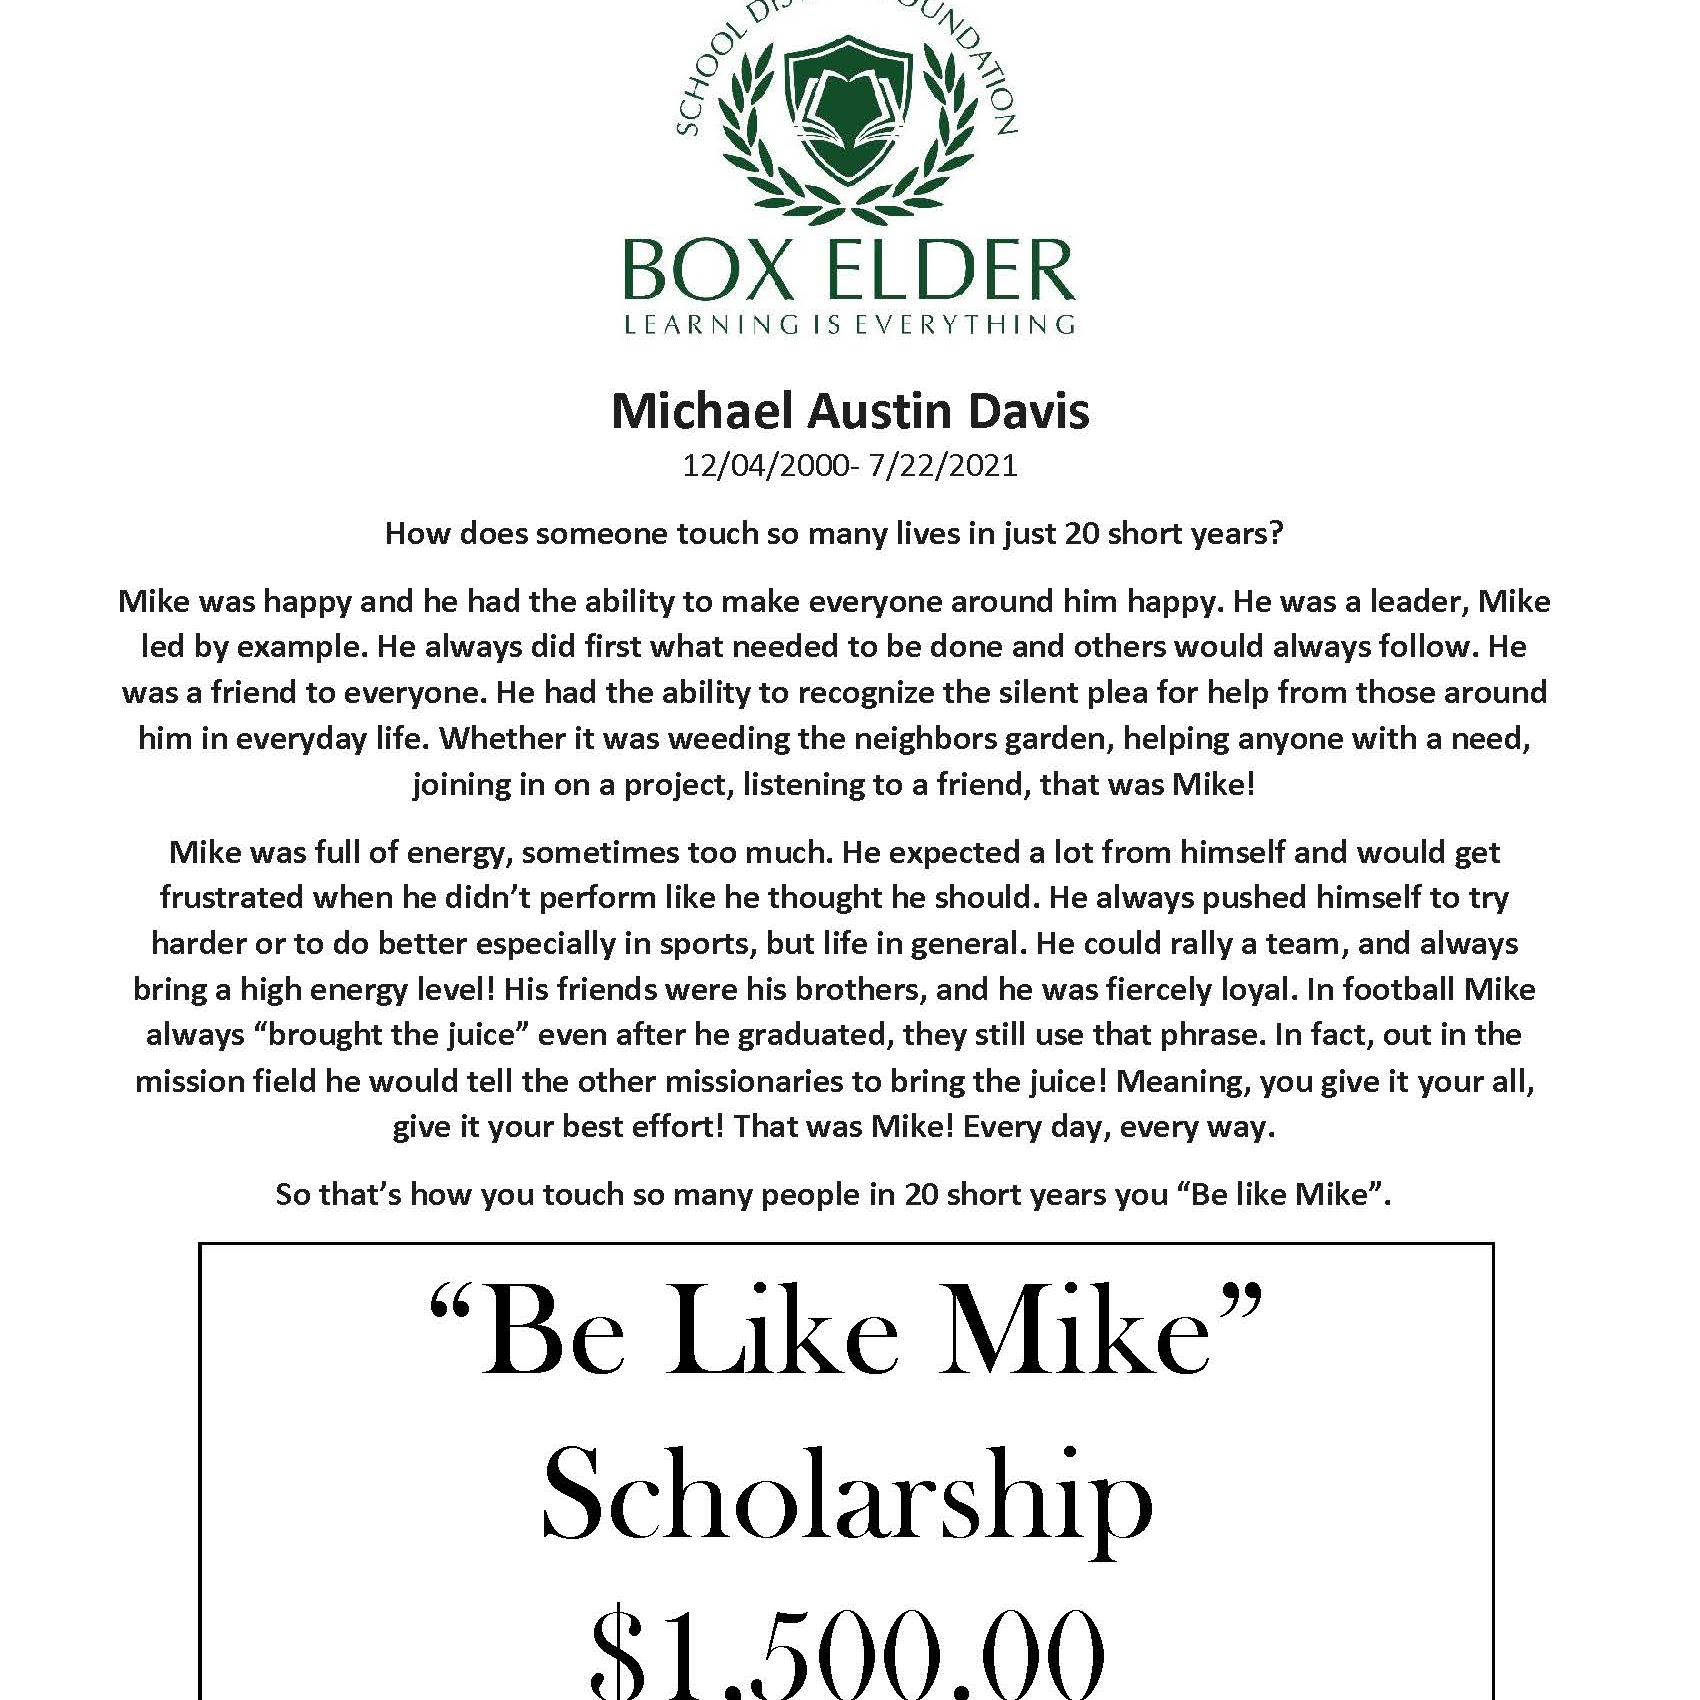 "Be Like Mike" Scholarship